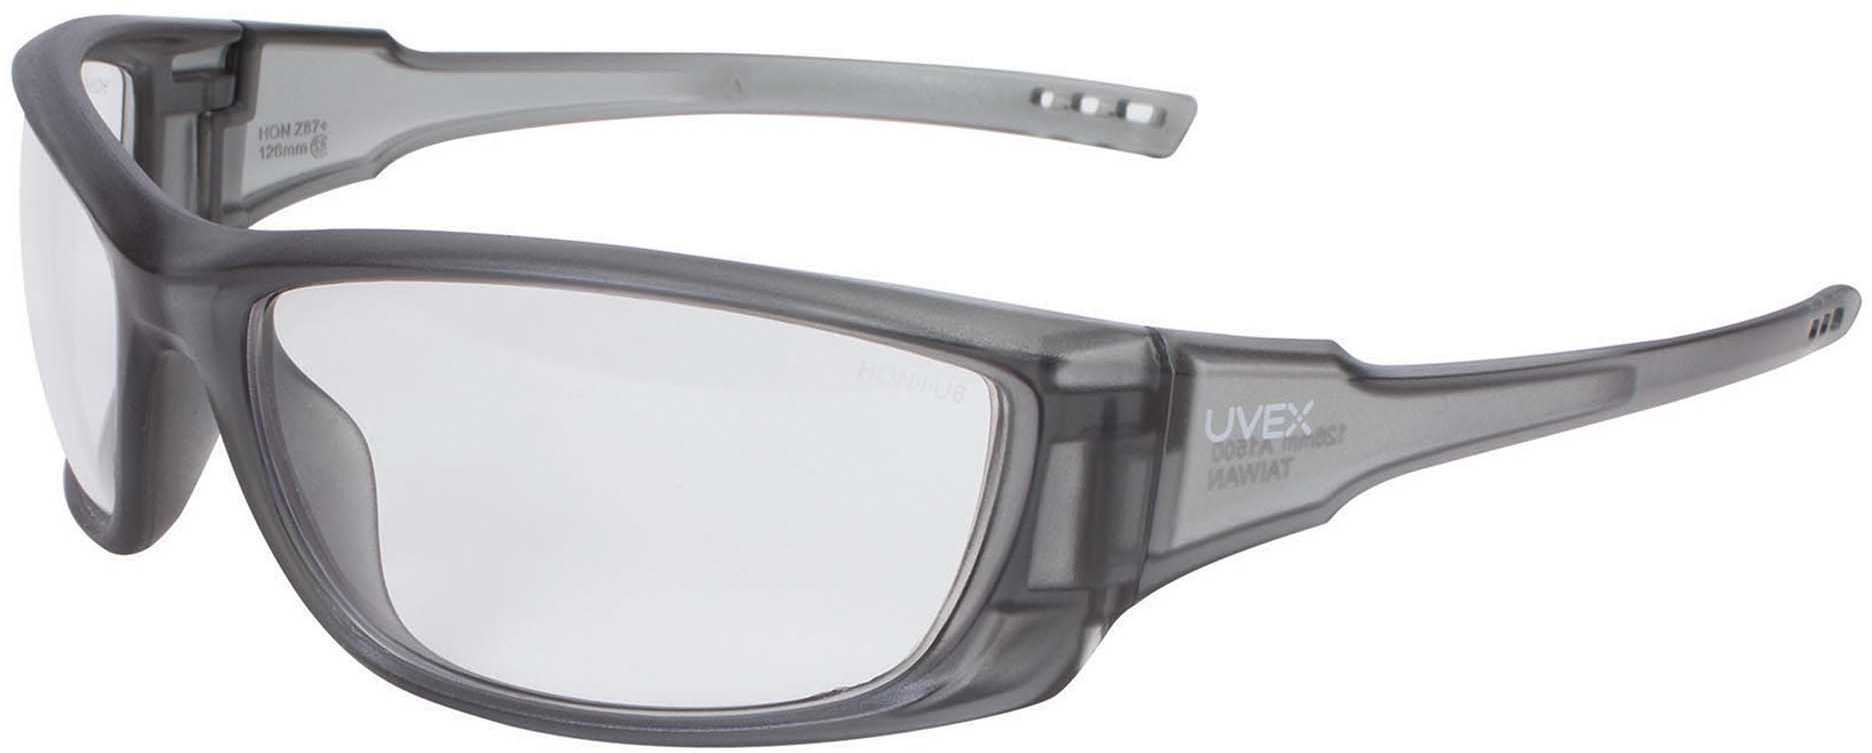 Howard Leight Uvex A1500 Safety Eyewear w/Hardcoat Lense Clear Md: R-02226